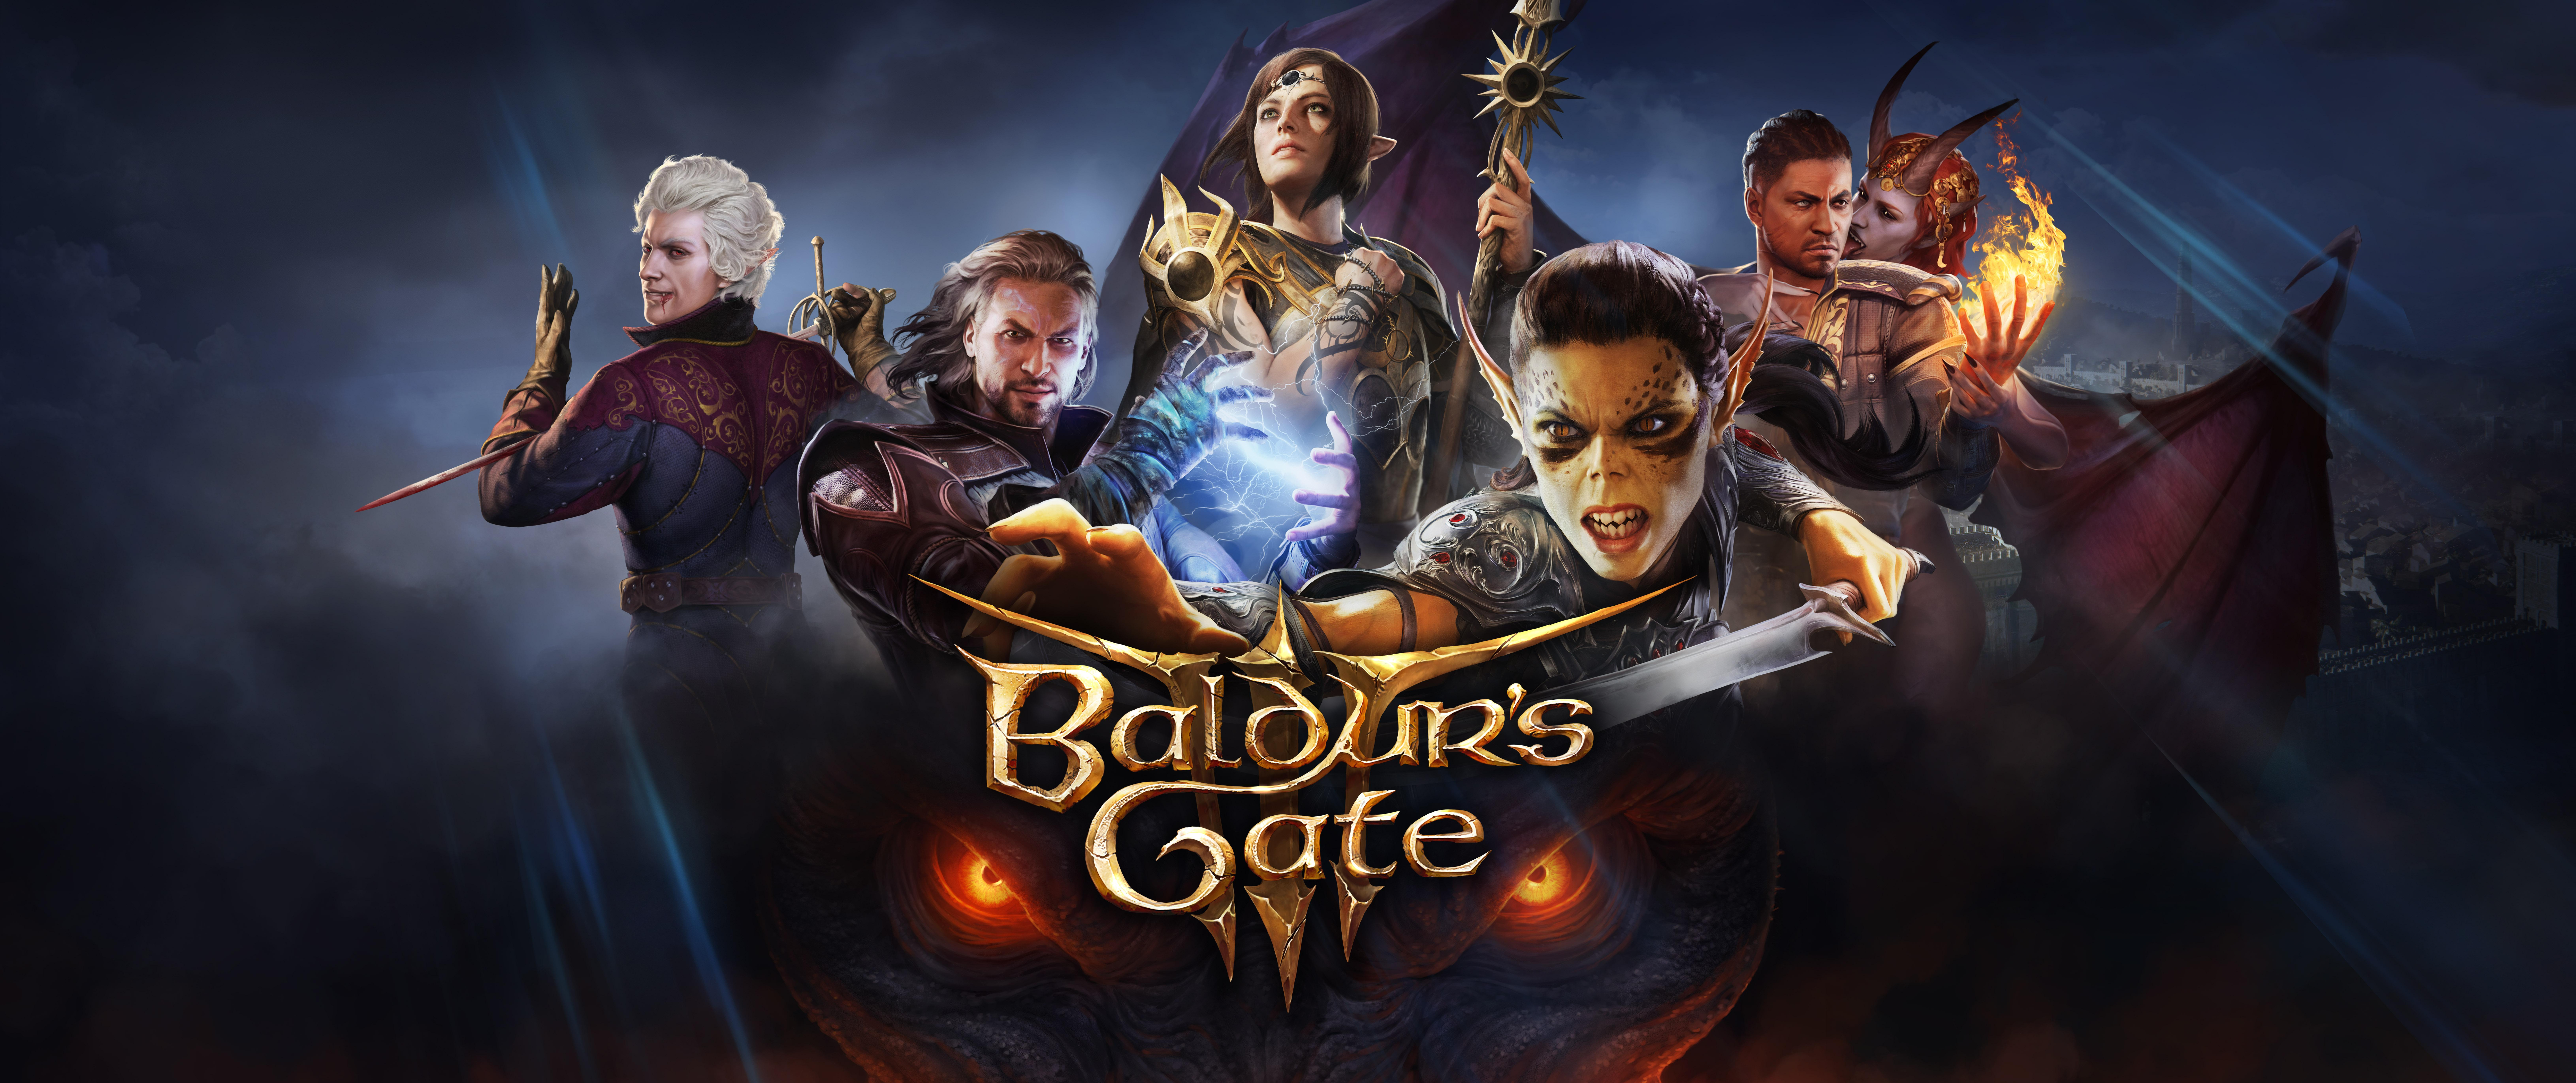 Baldur S Gate HD Wallpaper And Background